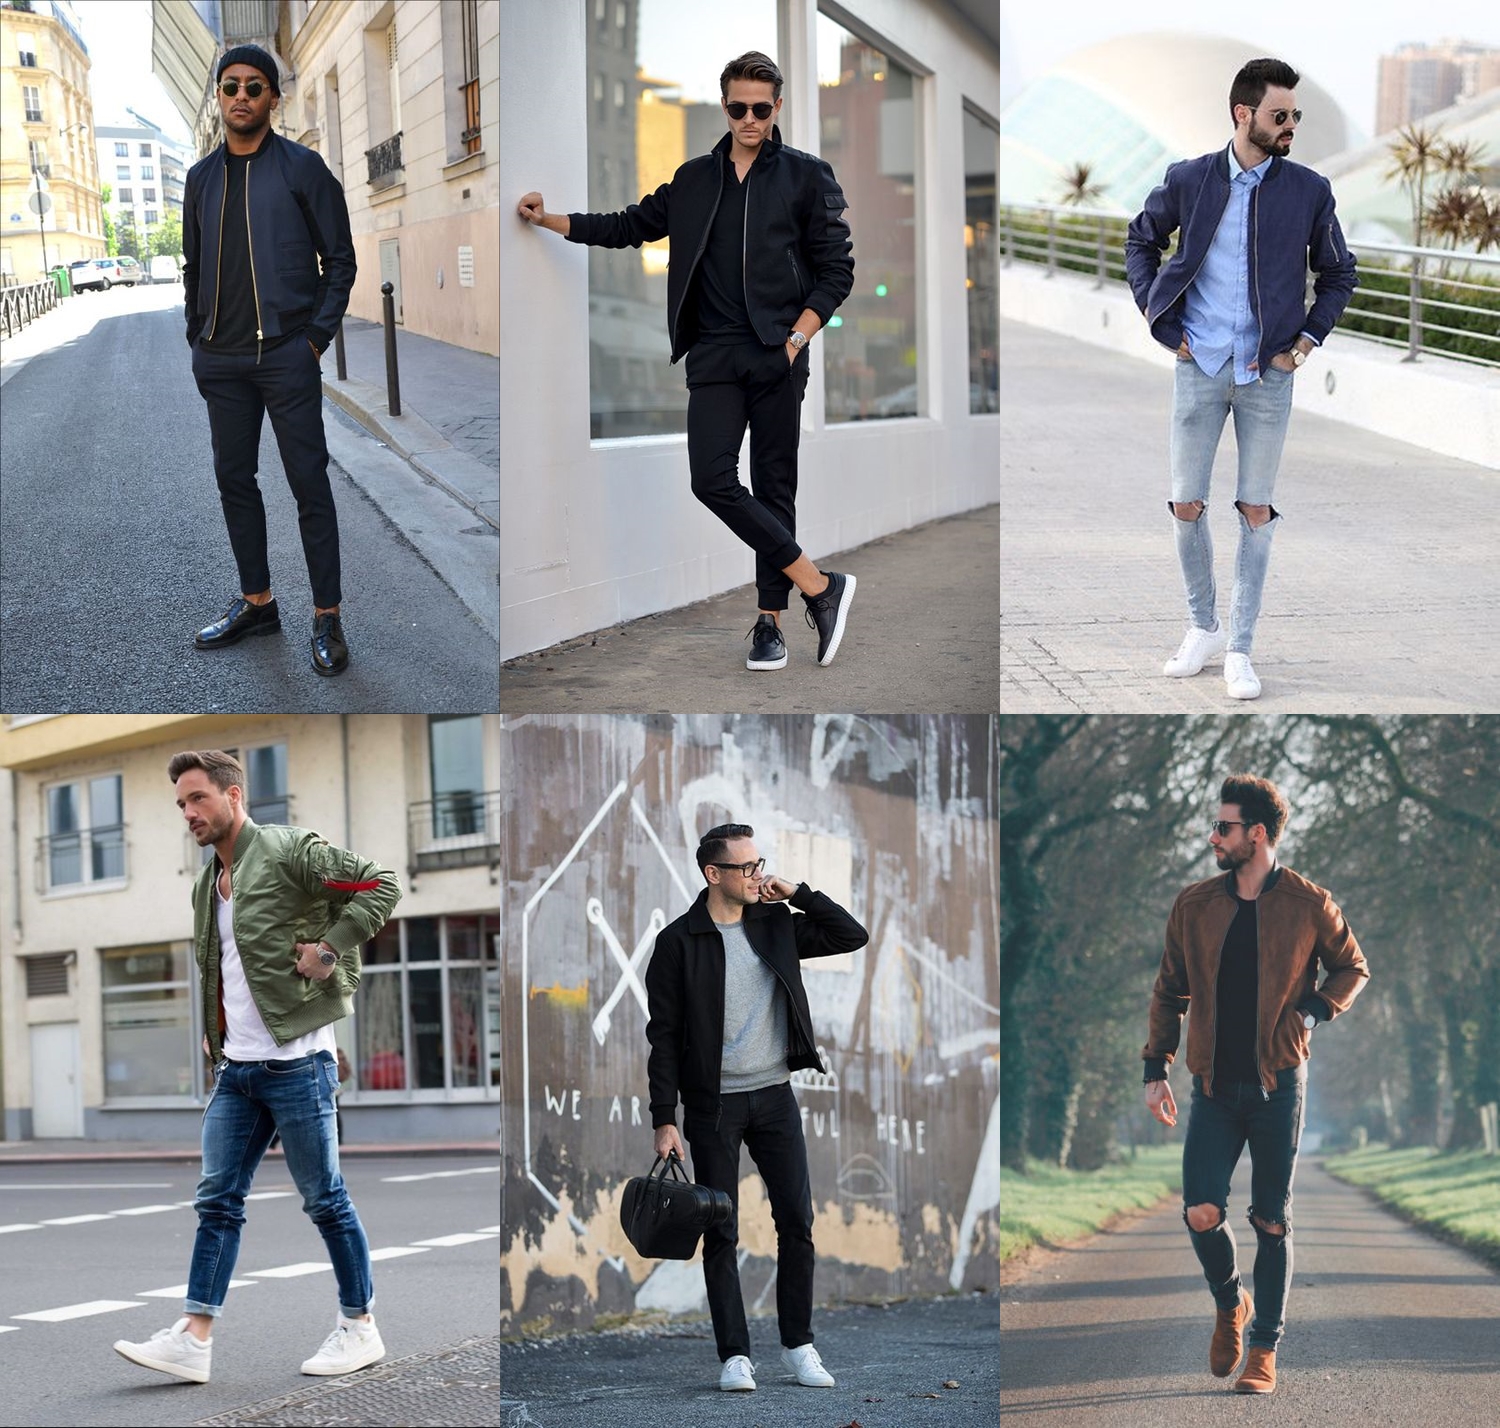 jaqueta masculina, , jacket for men, tendencia de moda masculina 2017, look masculino 2017, estilo masculino, blog de moda masculina, moda sem censura, alex cursino, 3